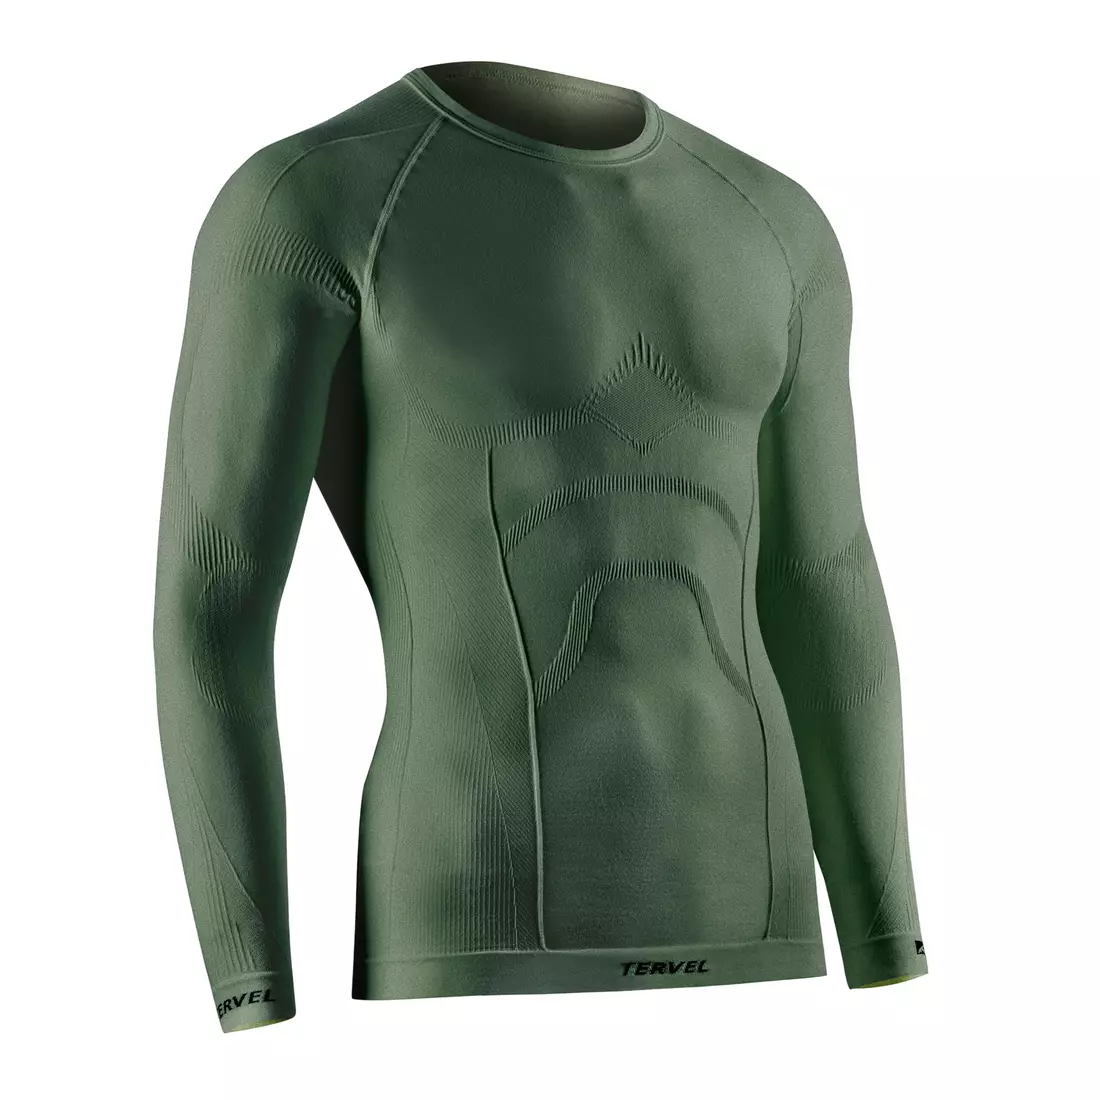 TERVEL COMFORTLINE 1002 - Herren-Thermo-T-Shirt, Langarm, Farbe: Military (grün)